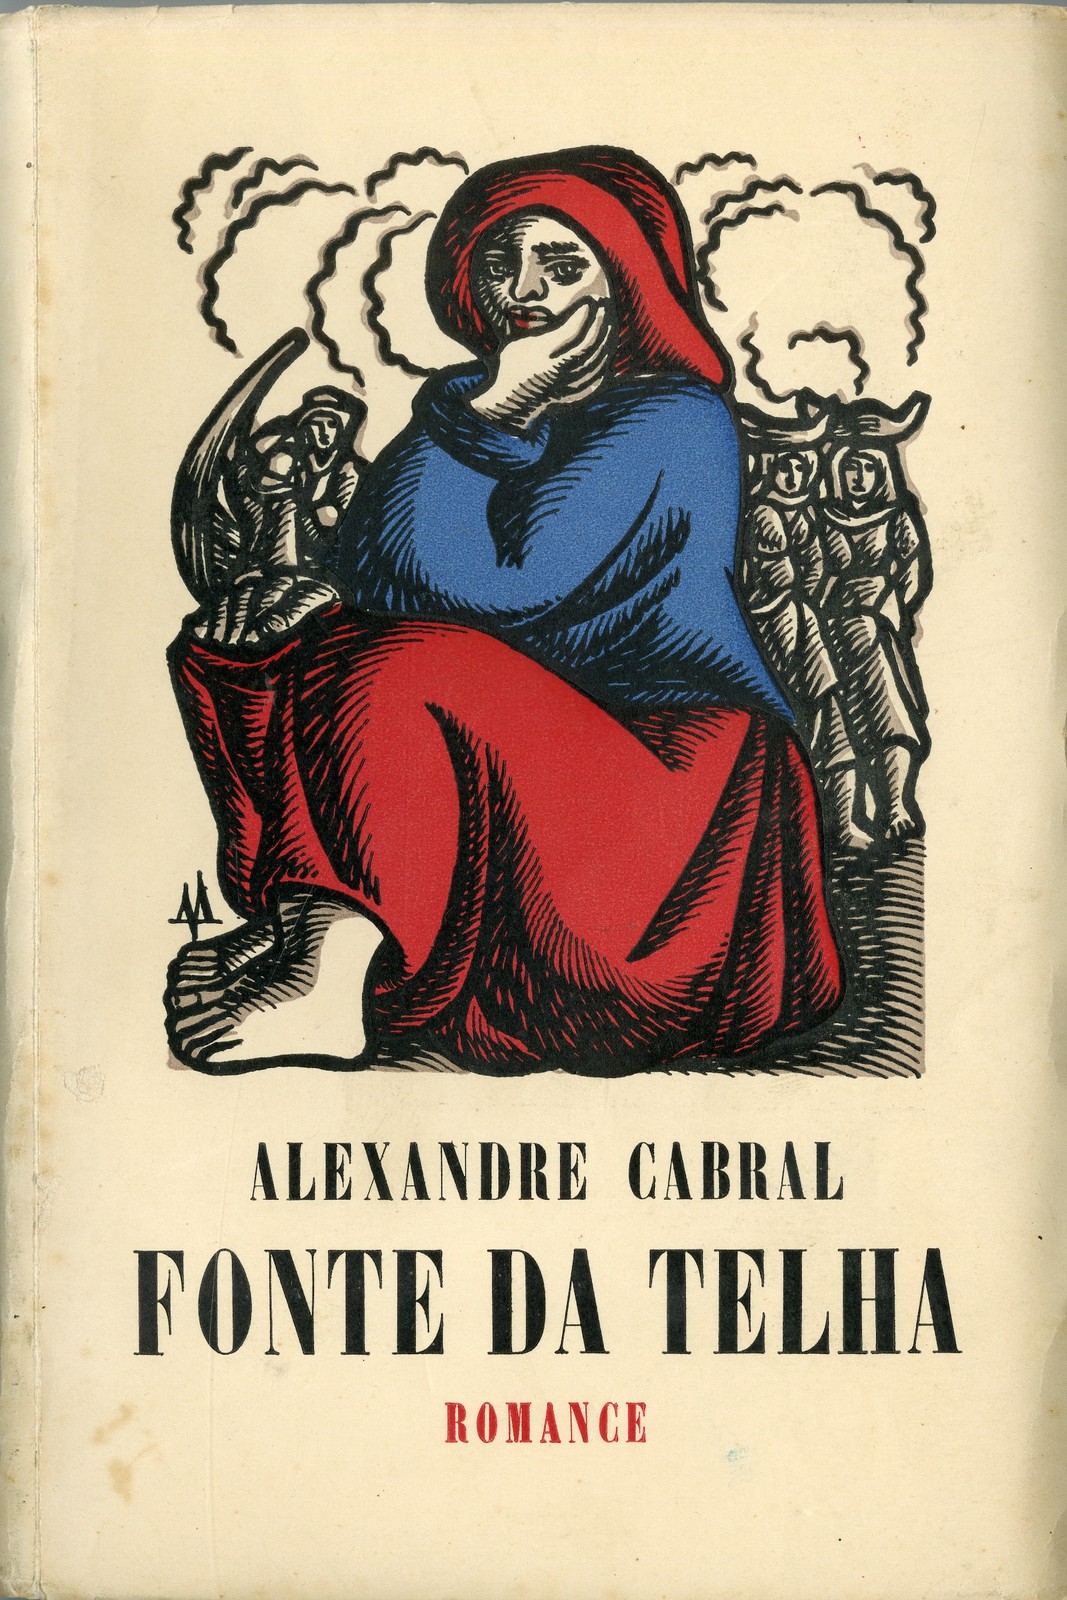 'Fonte da telha': romance por Alexandre Cabral, Lisboa, 1949